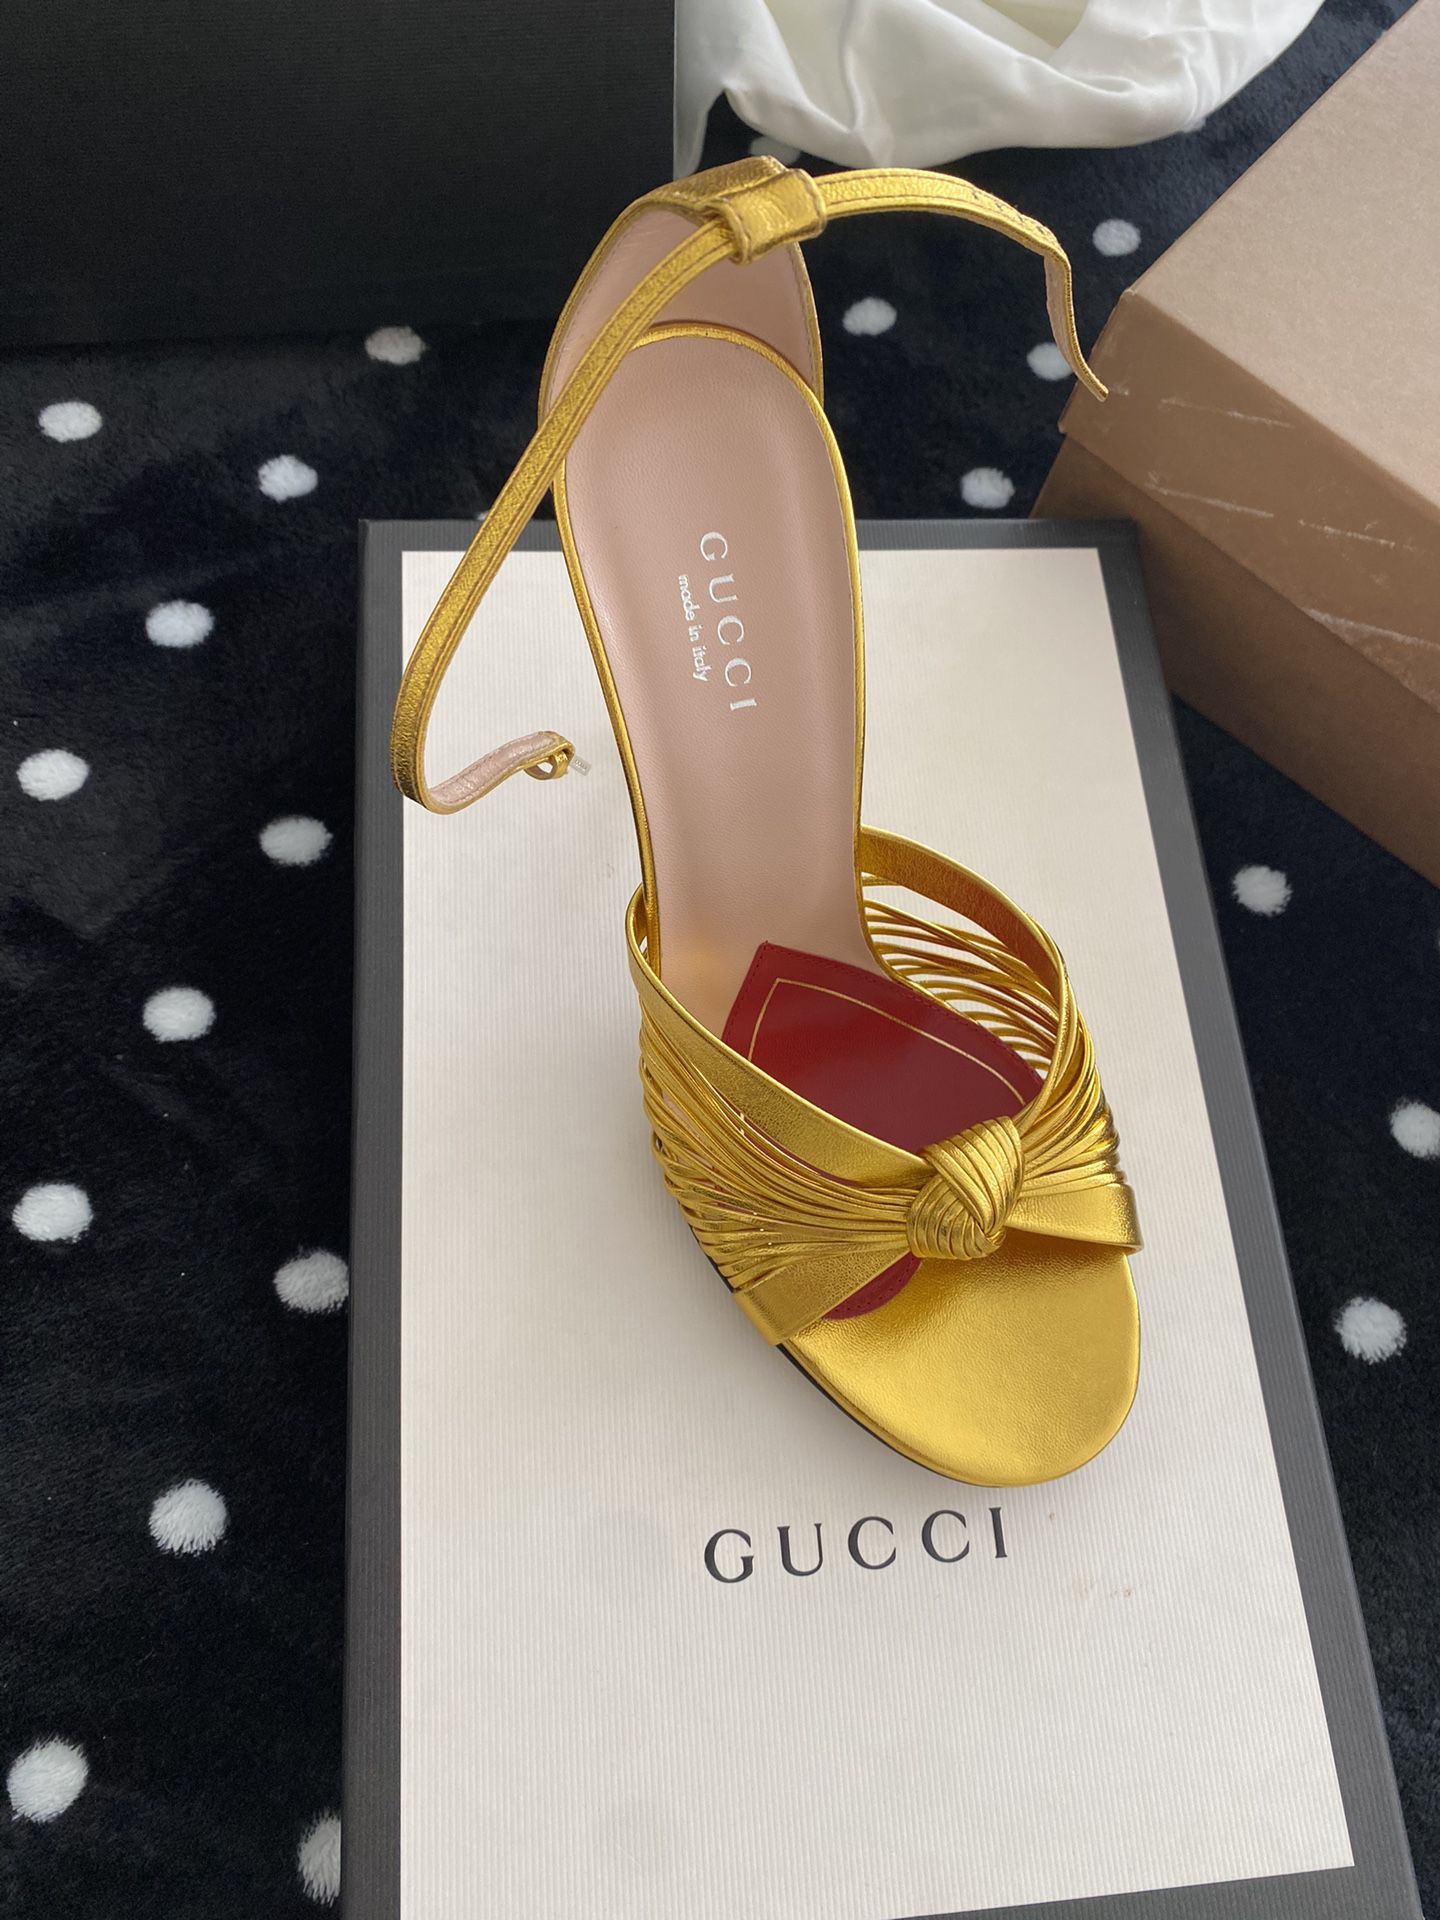 Gucci Metallic Gold Heels